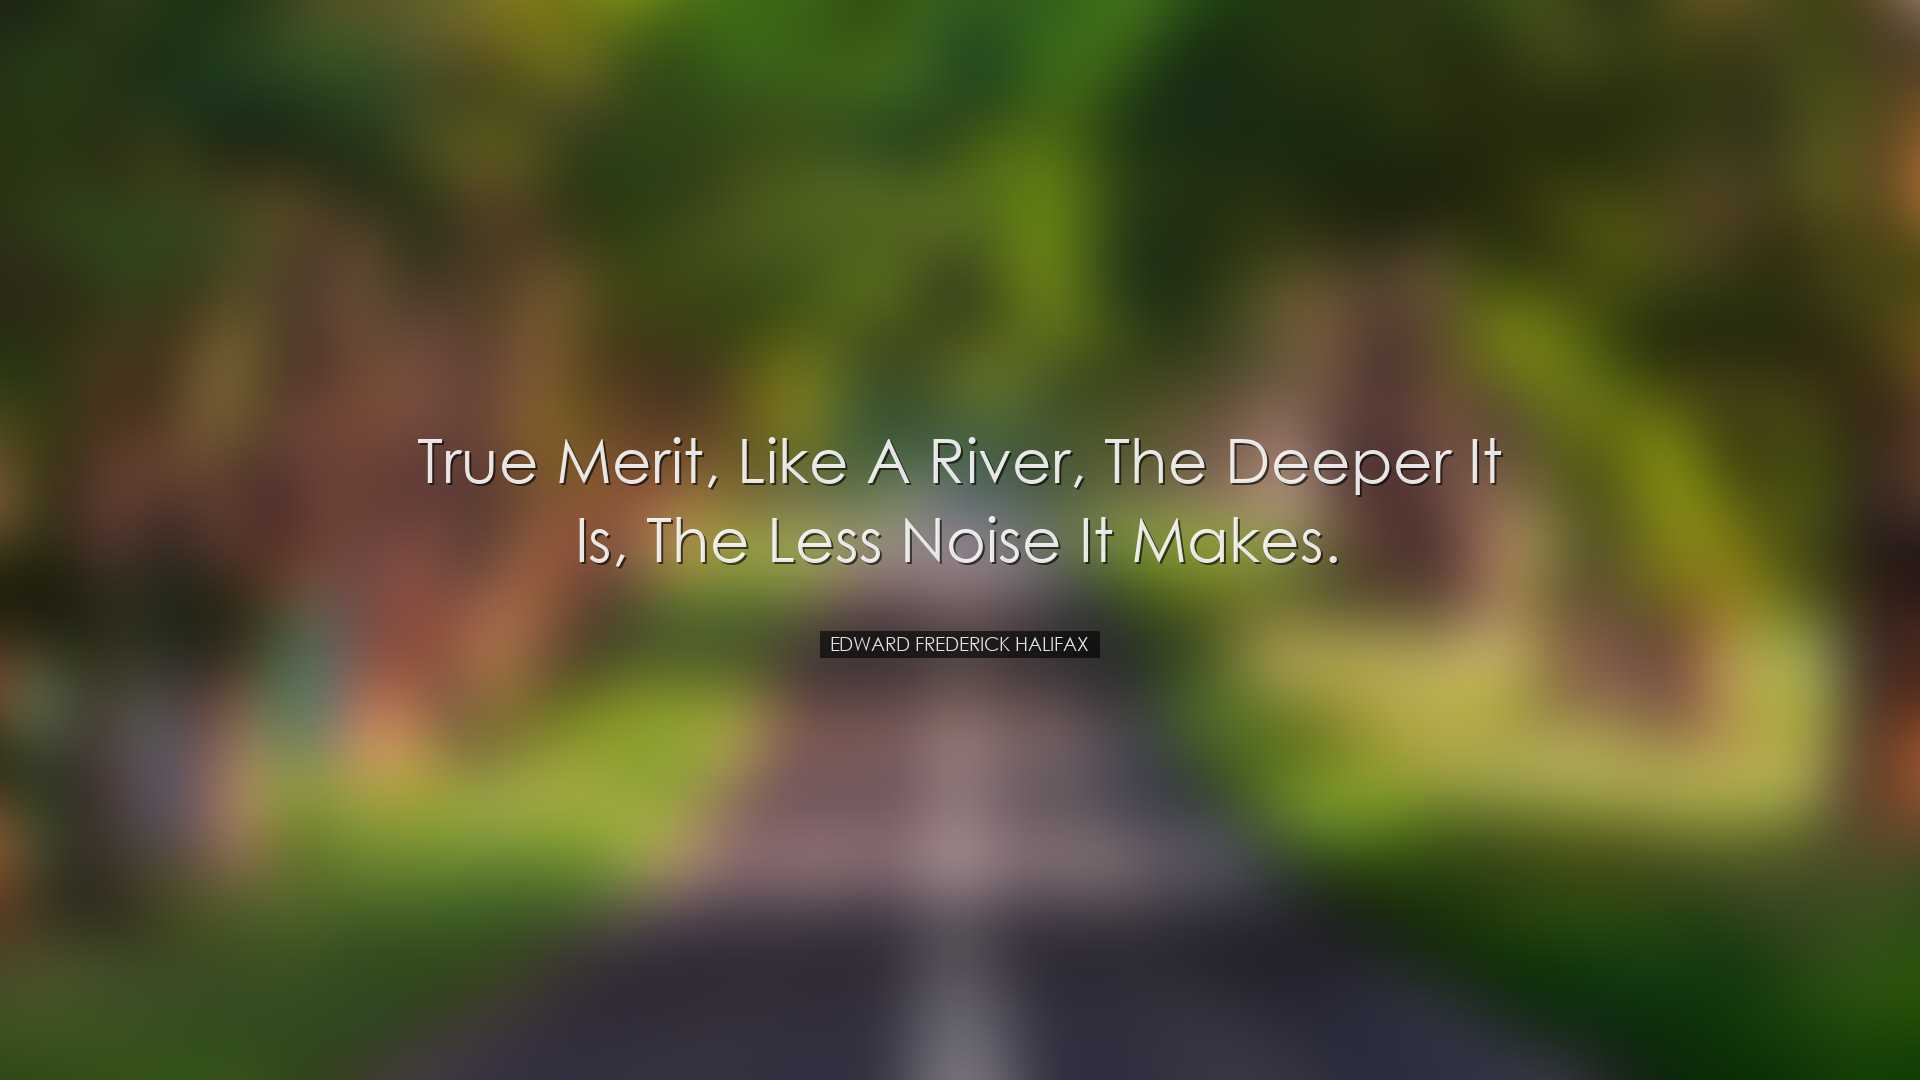 True merit, like a river, the deeper it is, the less noise it make